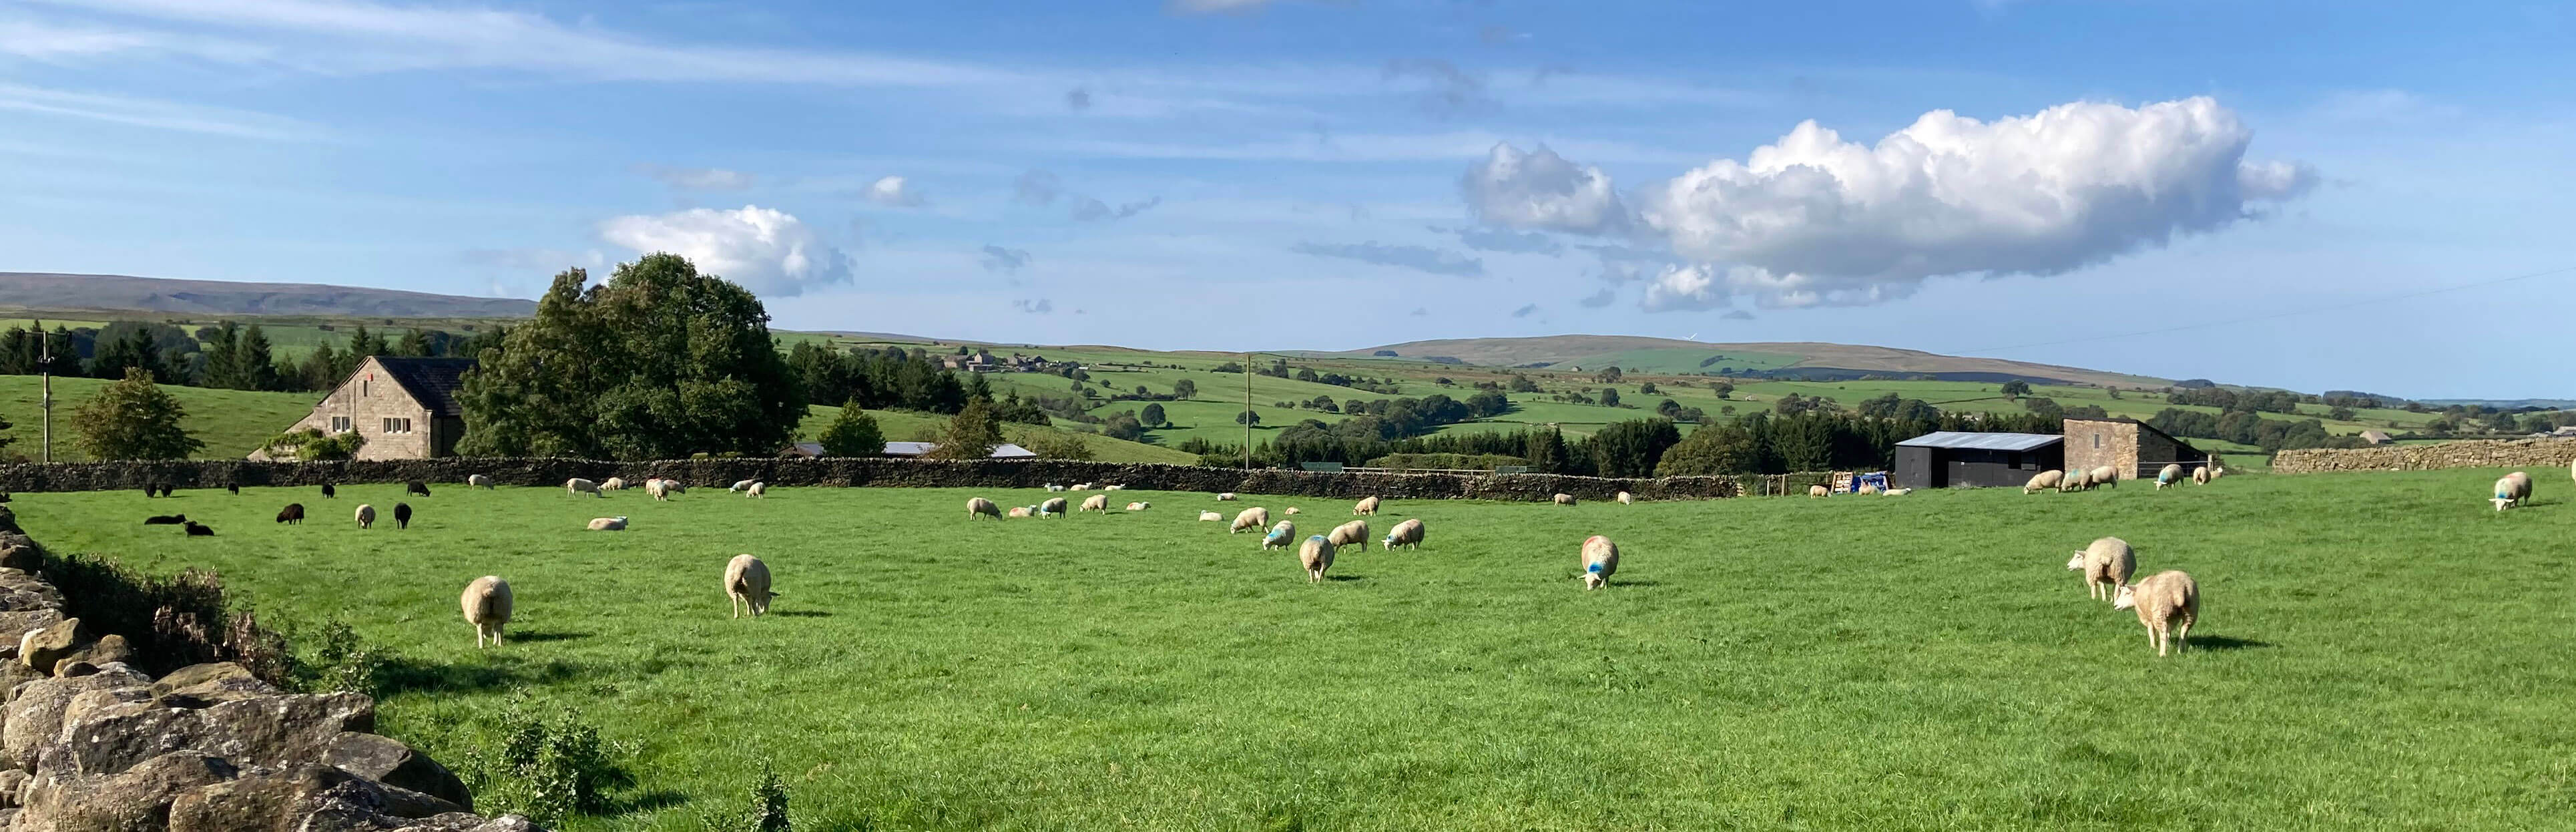 sheep field